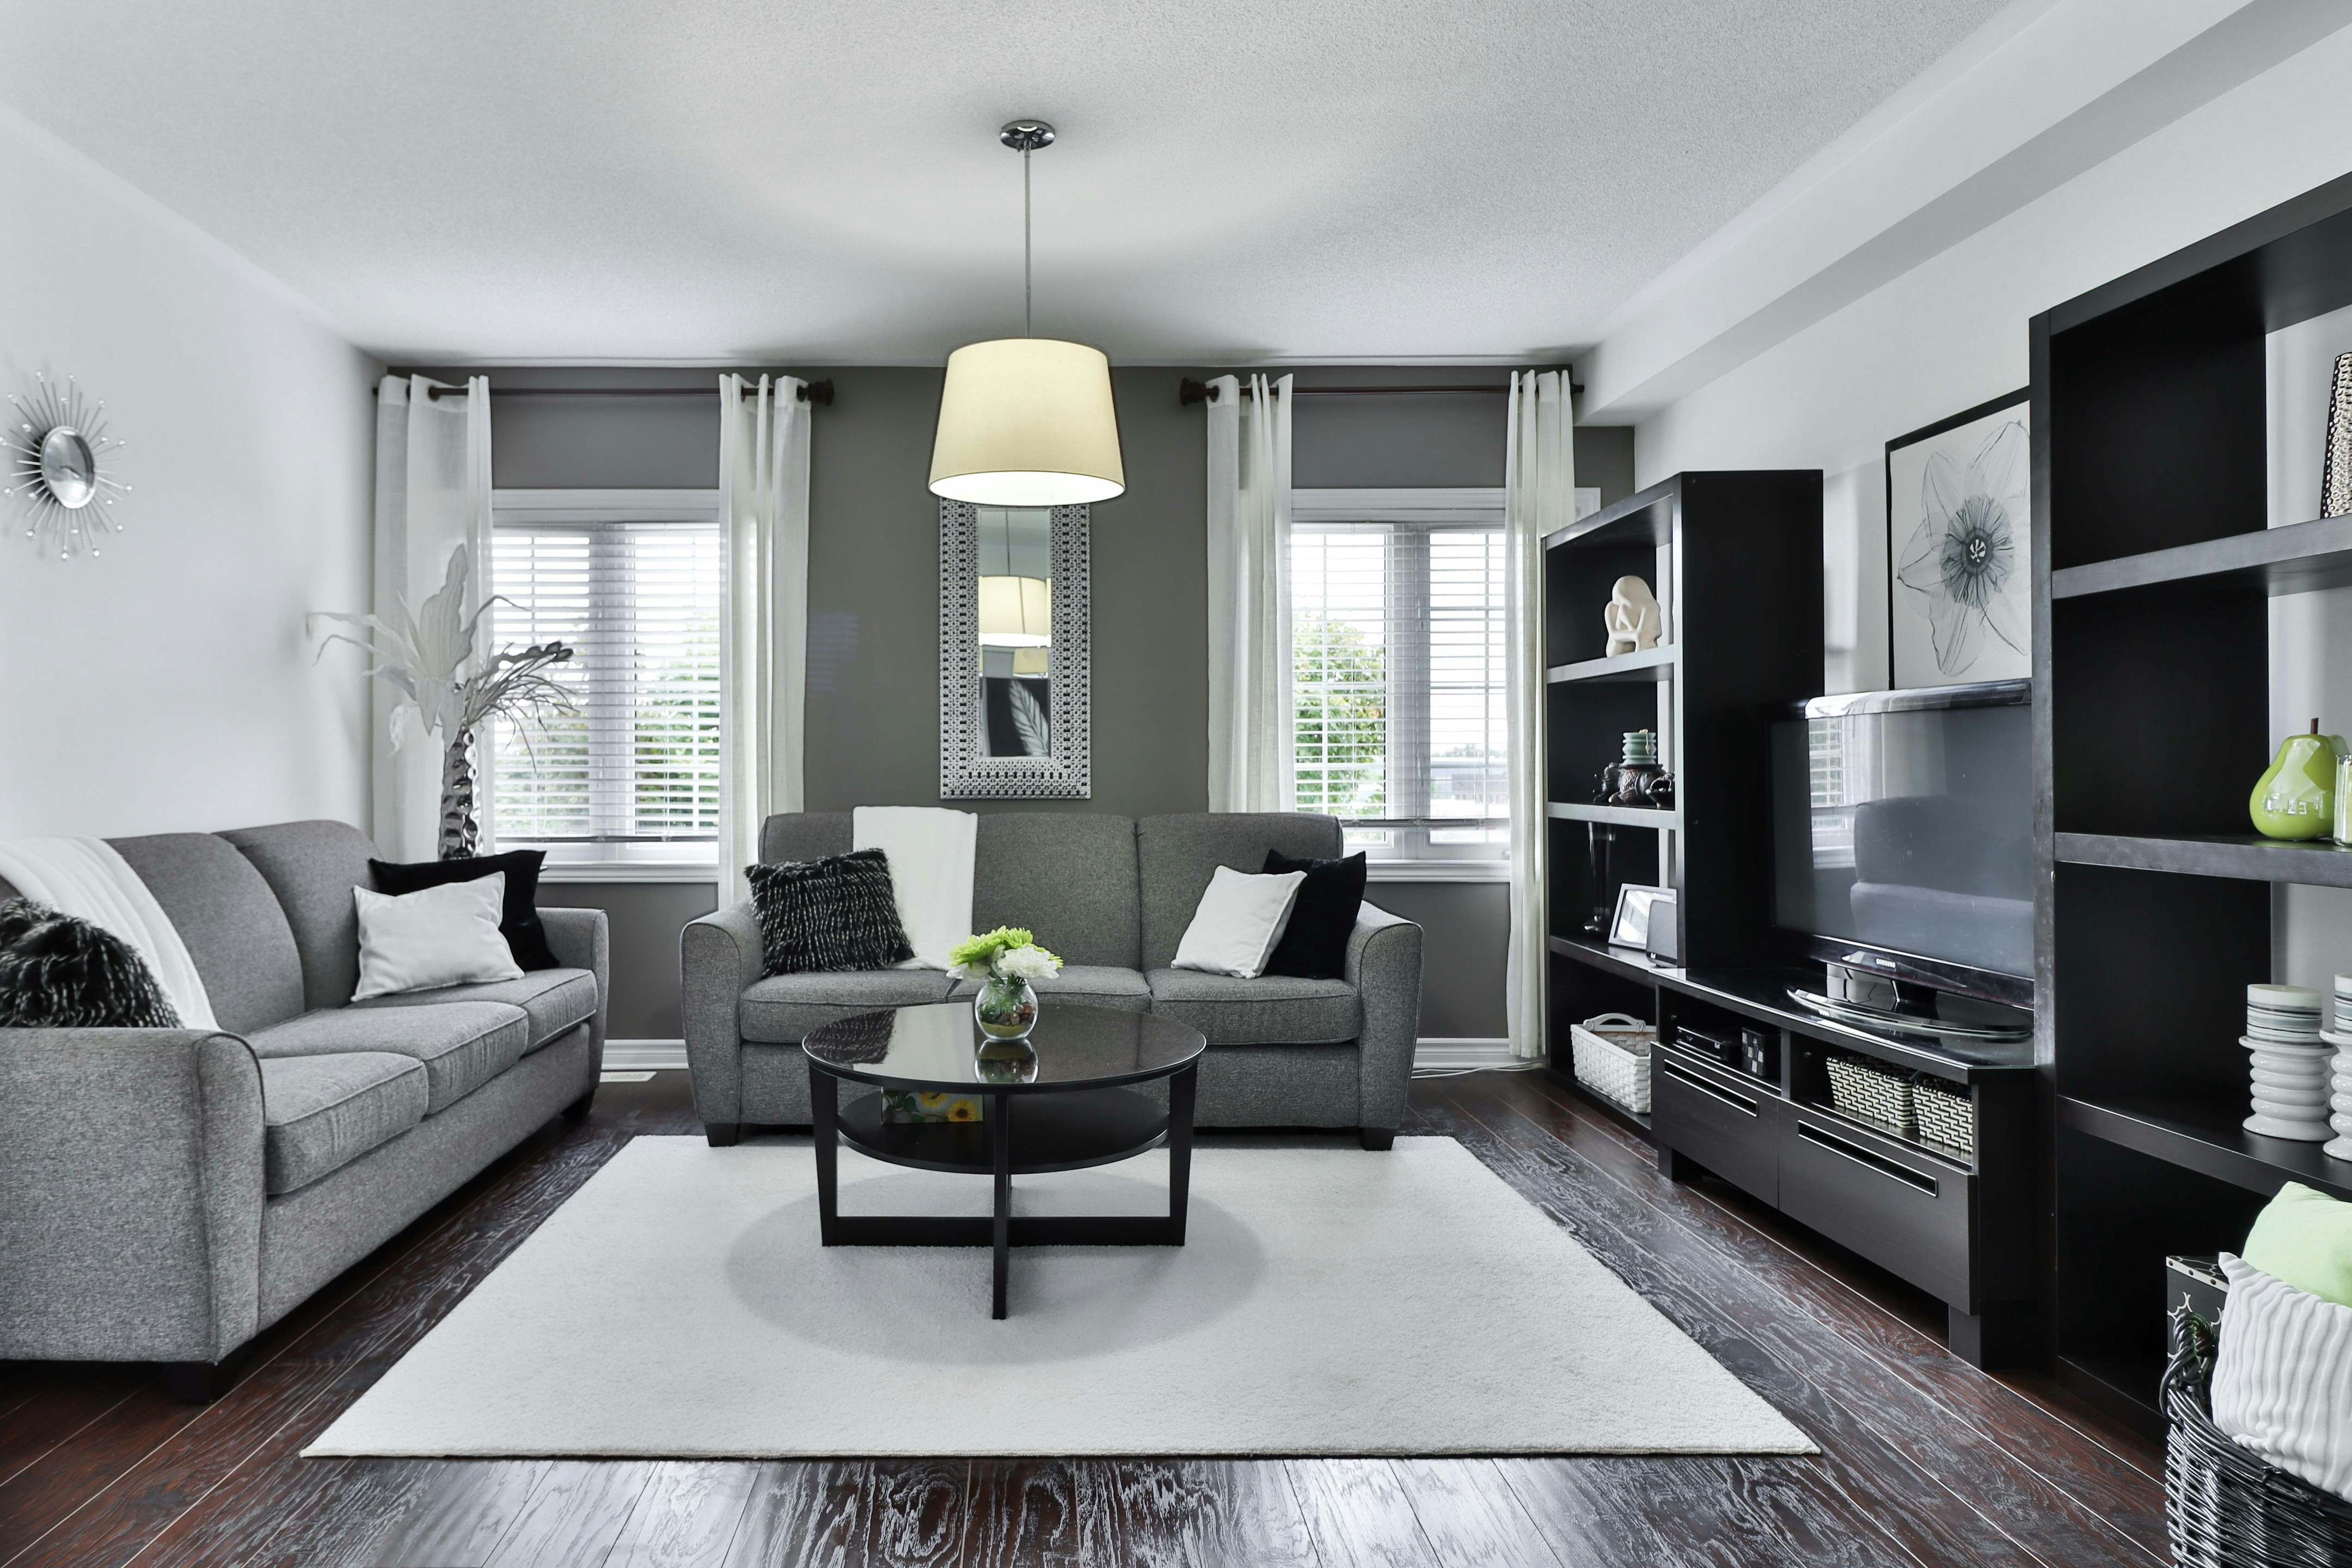 gray and white living room set